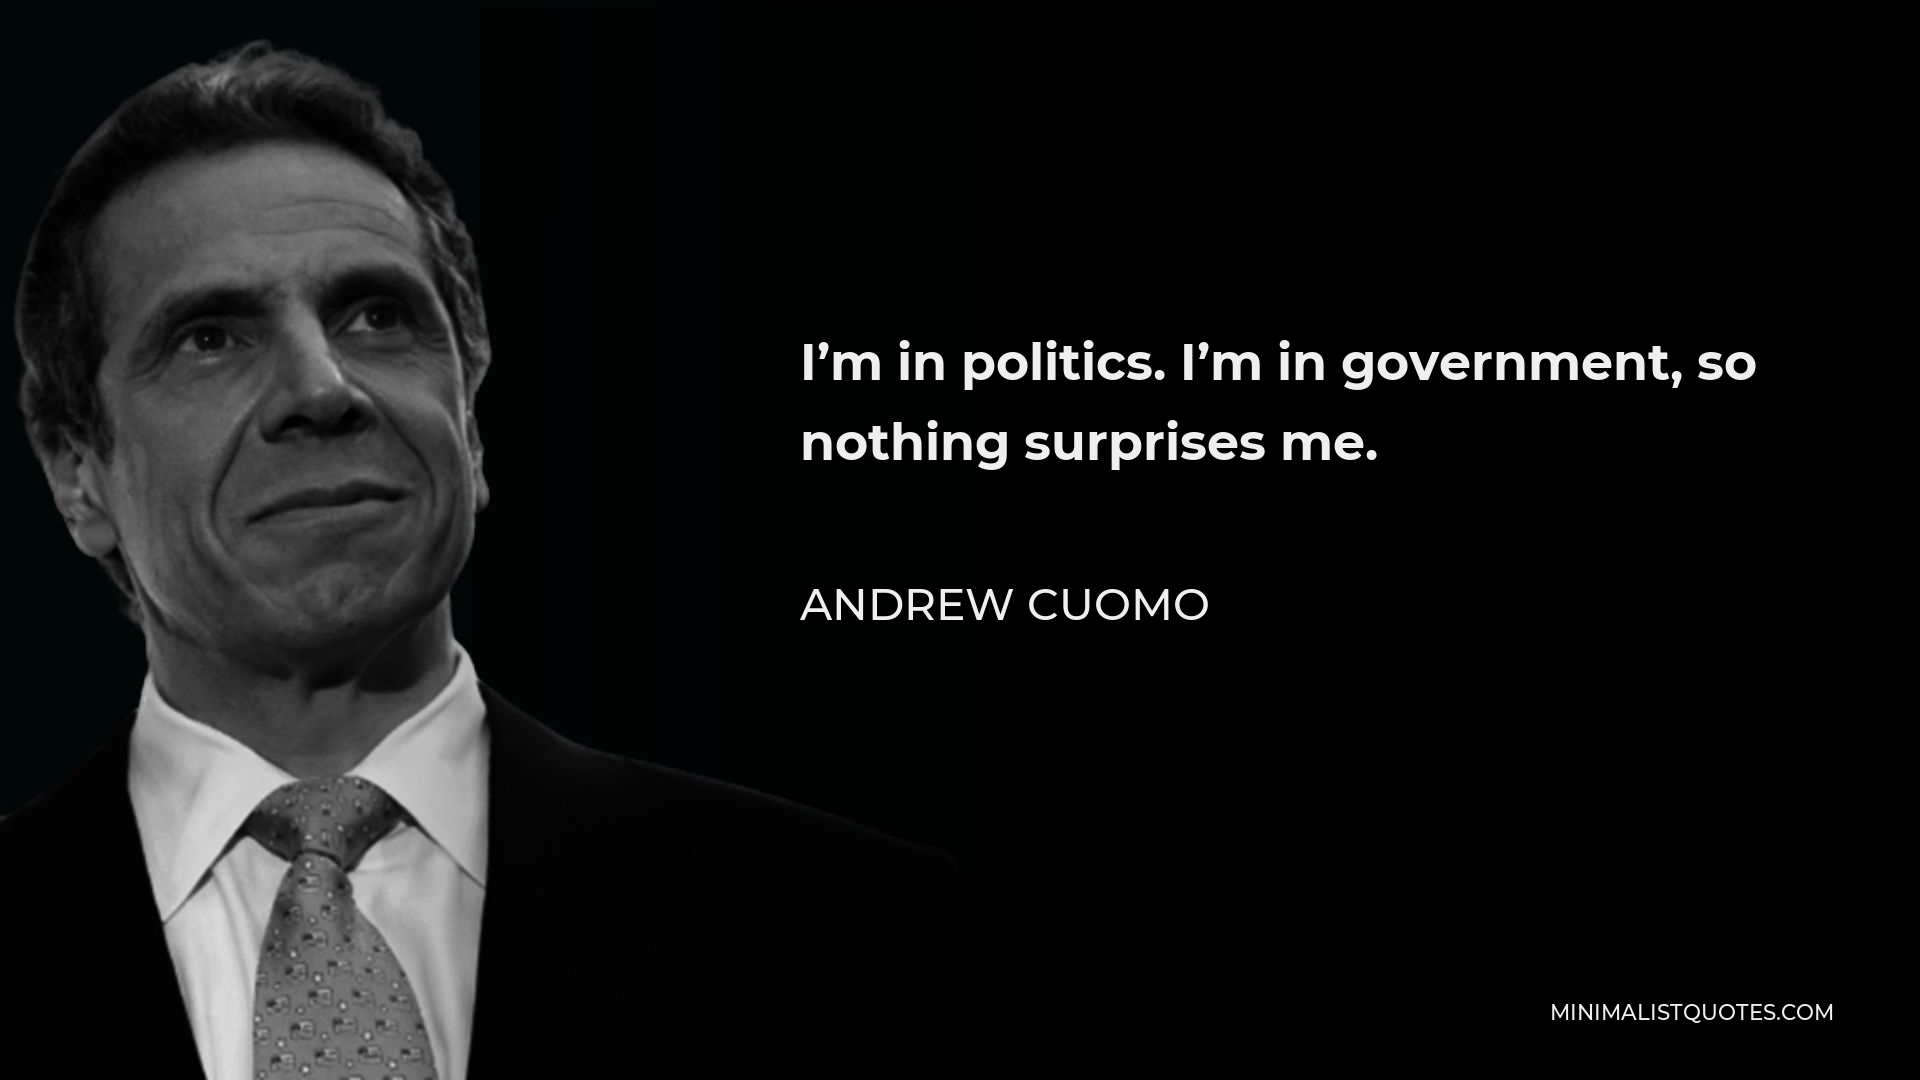 Andrew Cuomo Quote - I’m in politics. I’m in government, so nothing surprises me.